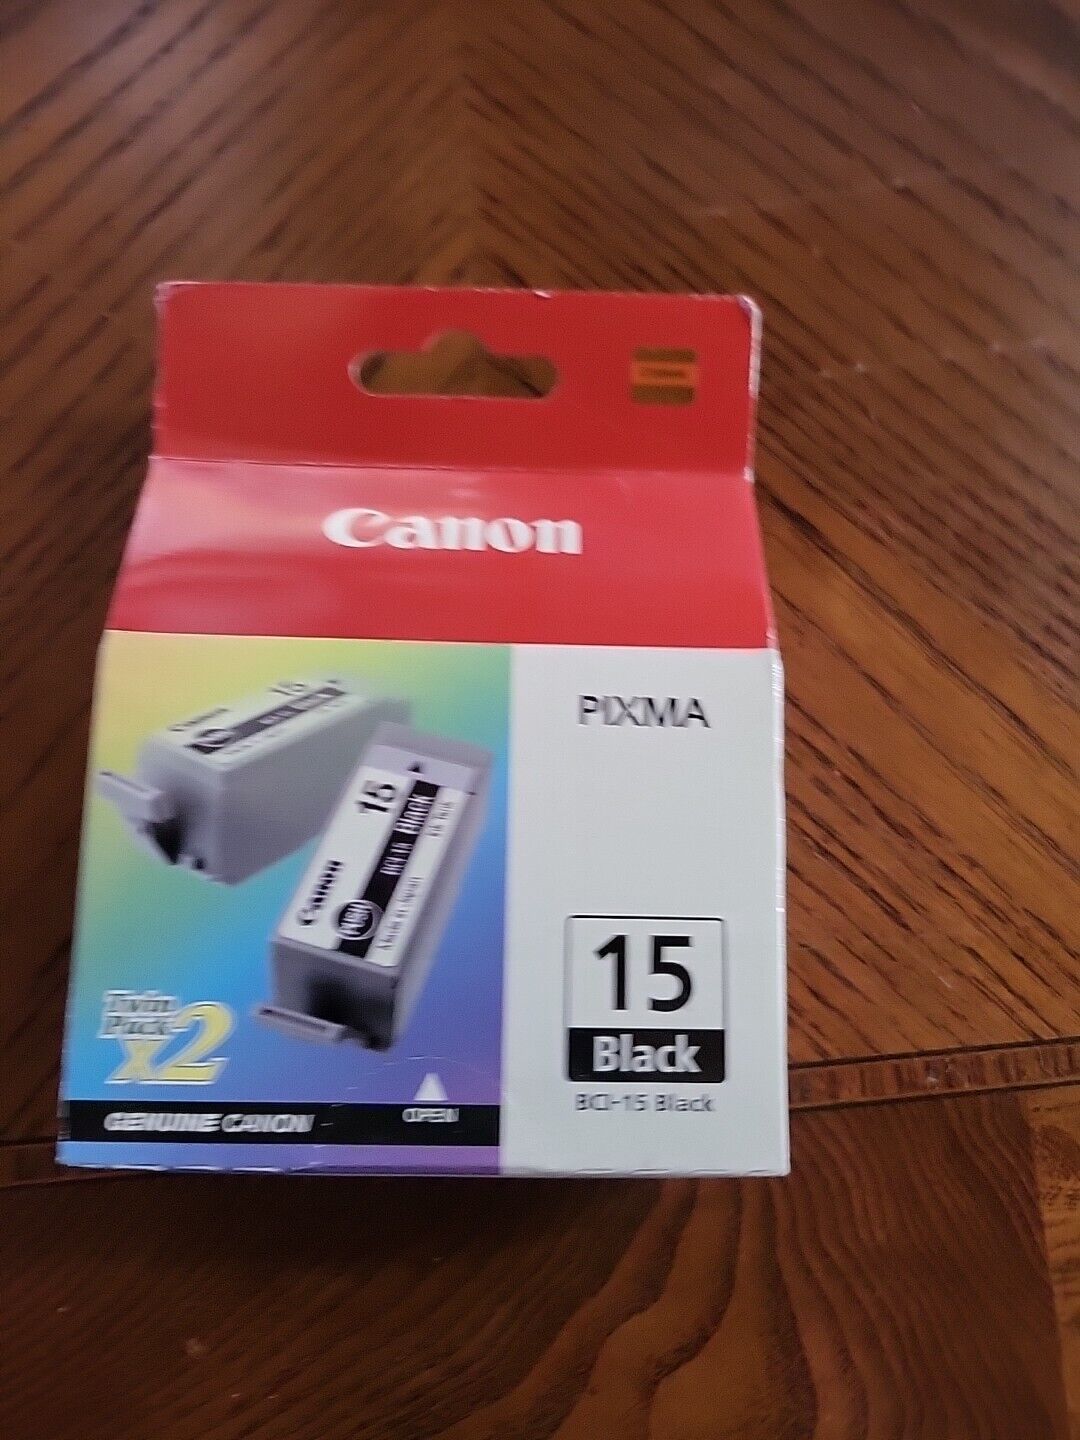 NEW Canon Pixma BCI-15 Black (BCI-15) Ink Black Twin 2/PK Cartridges 